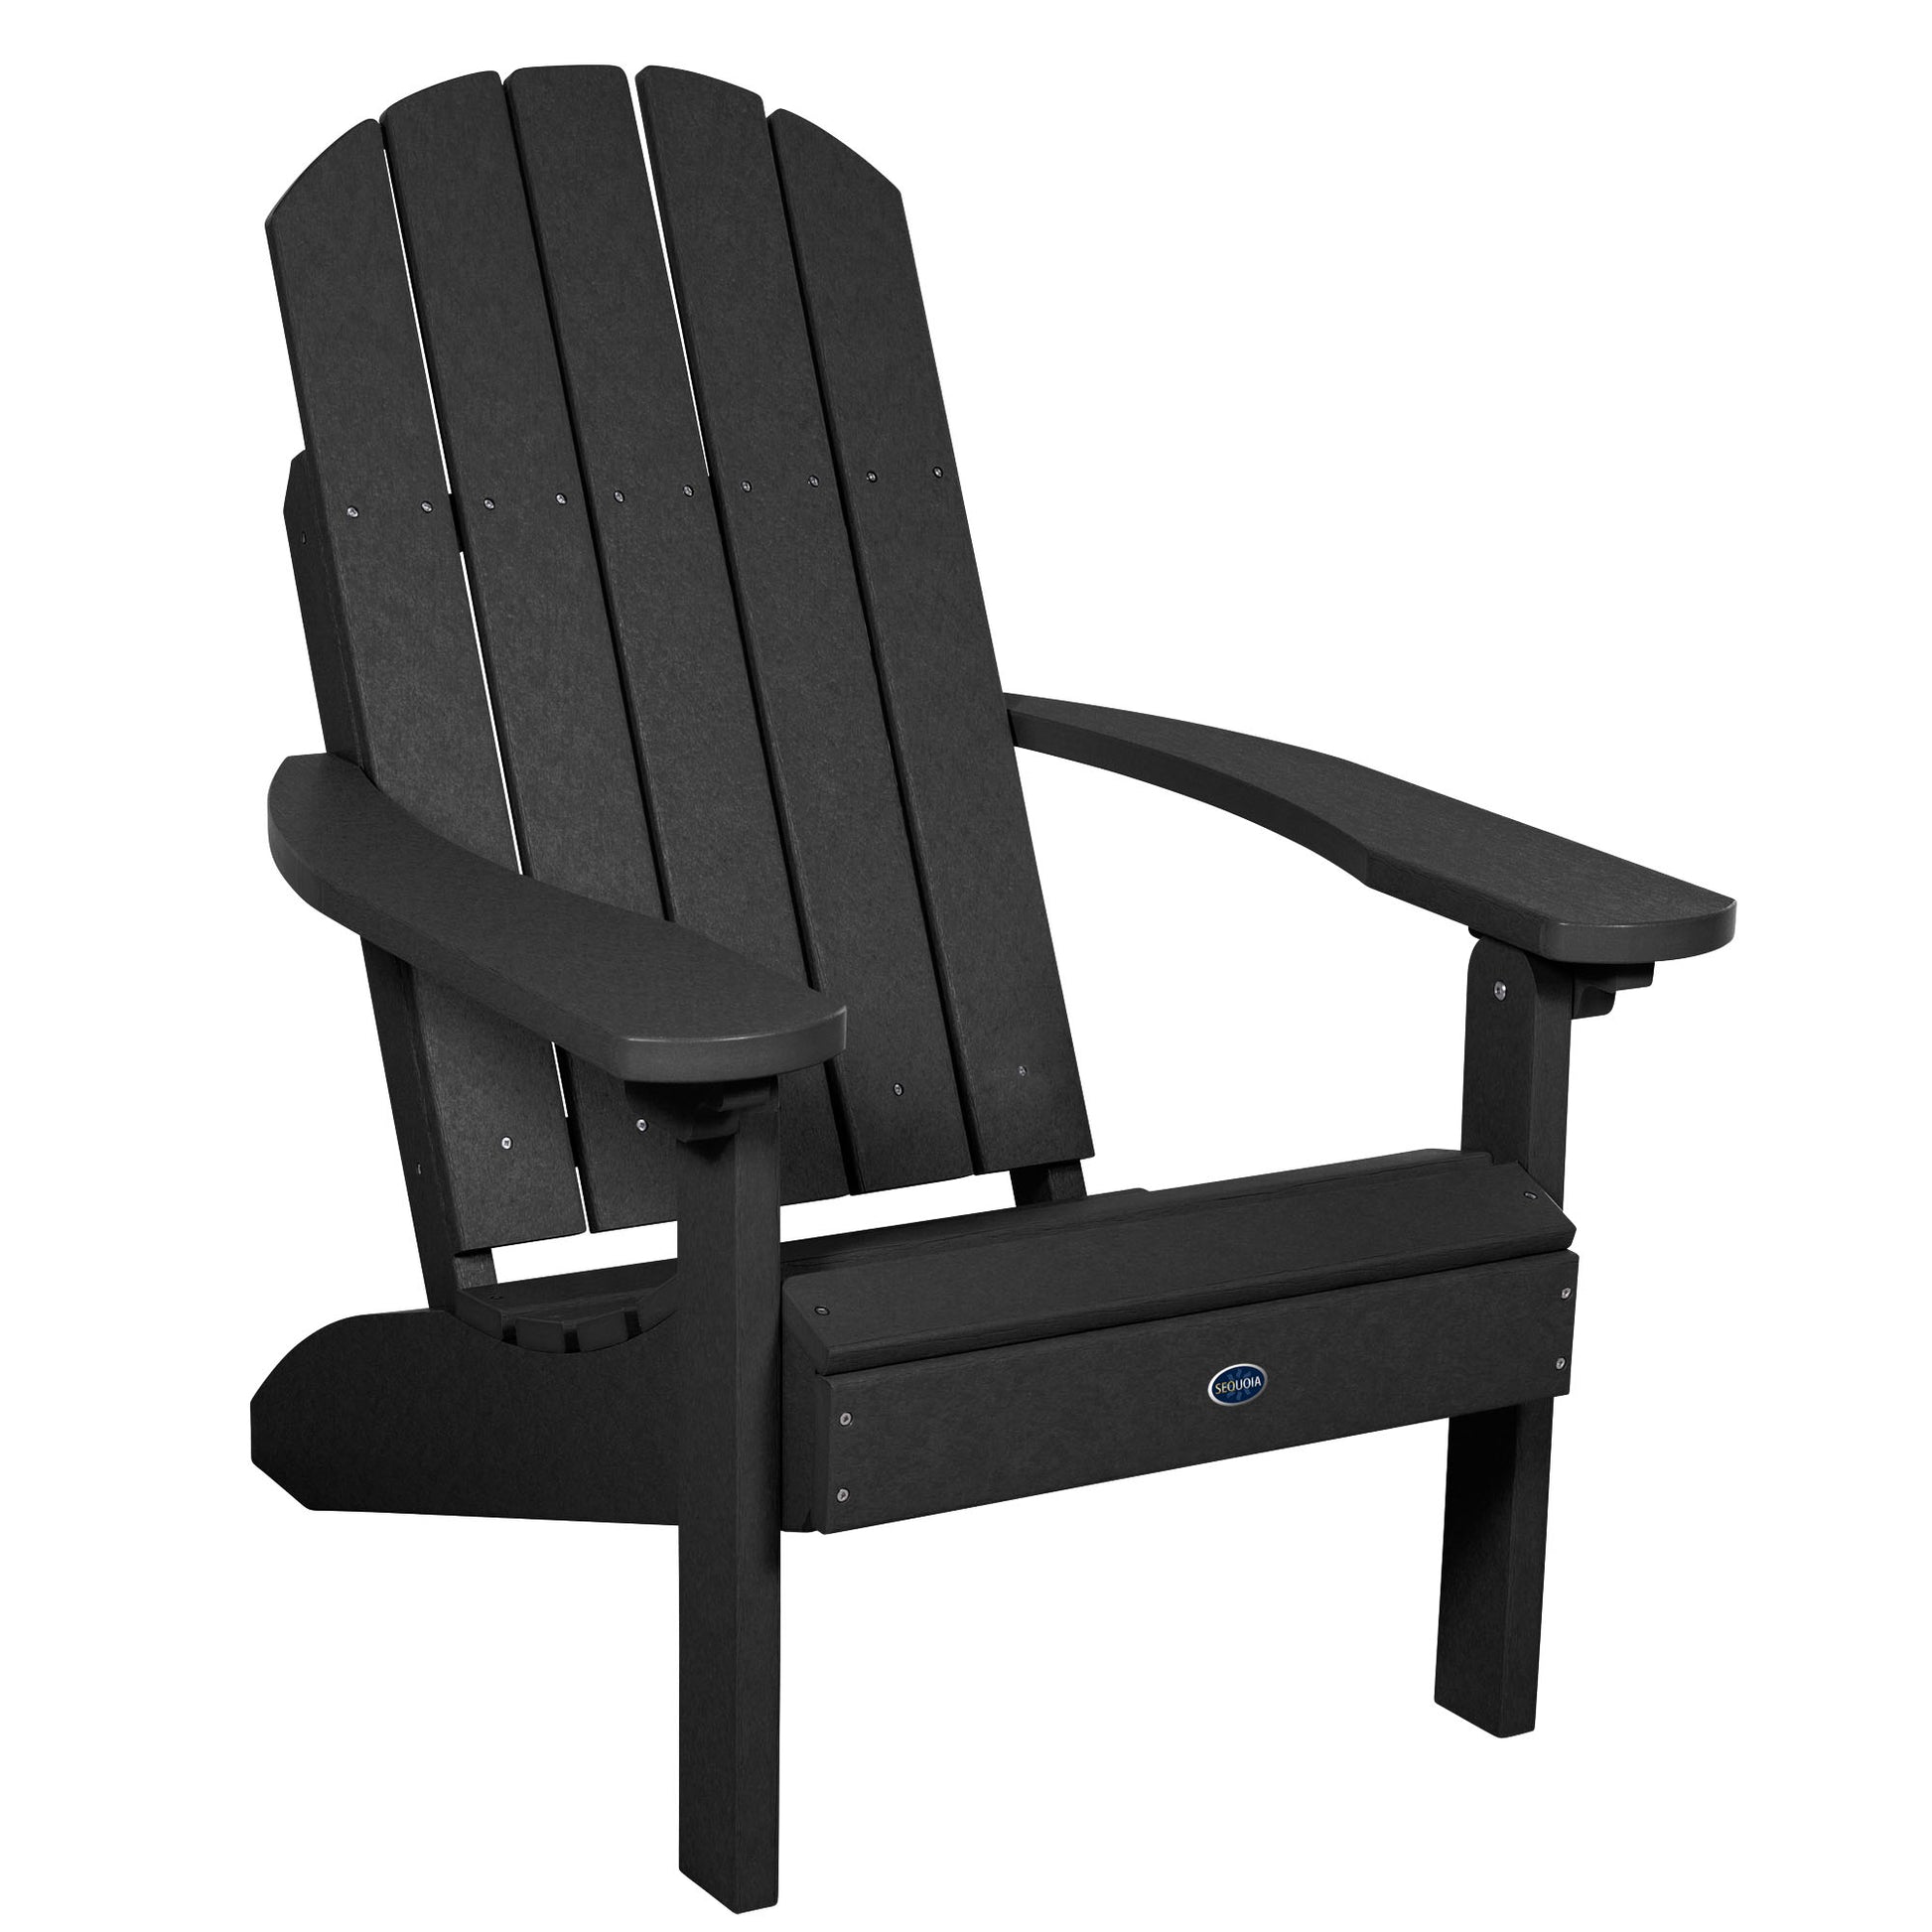 Sunrise Coast classic Adirondack chair in Black Sand